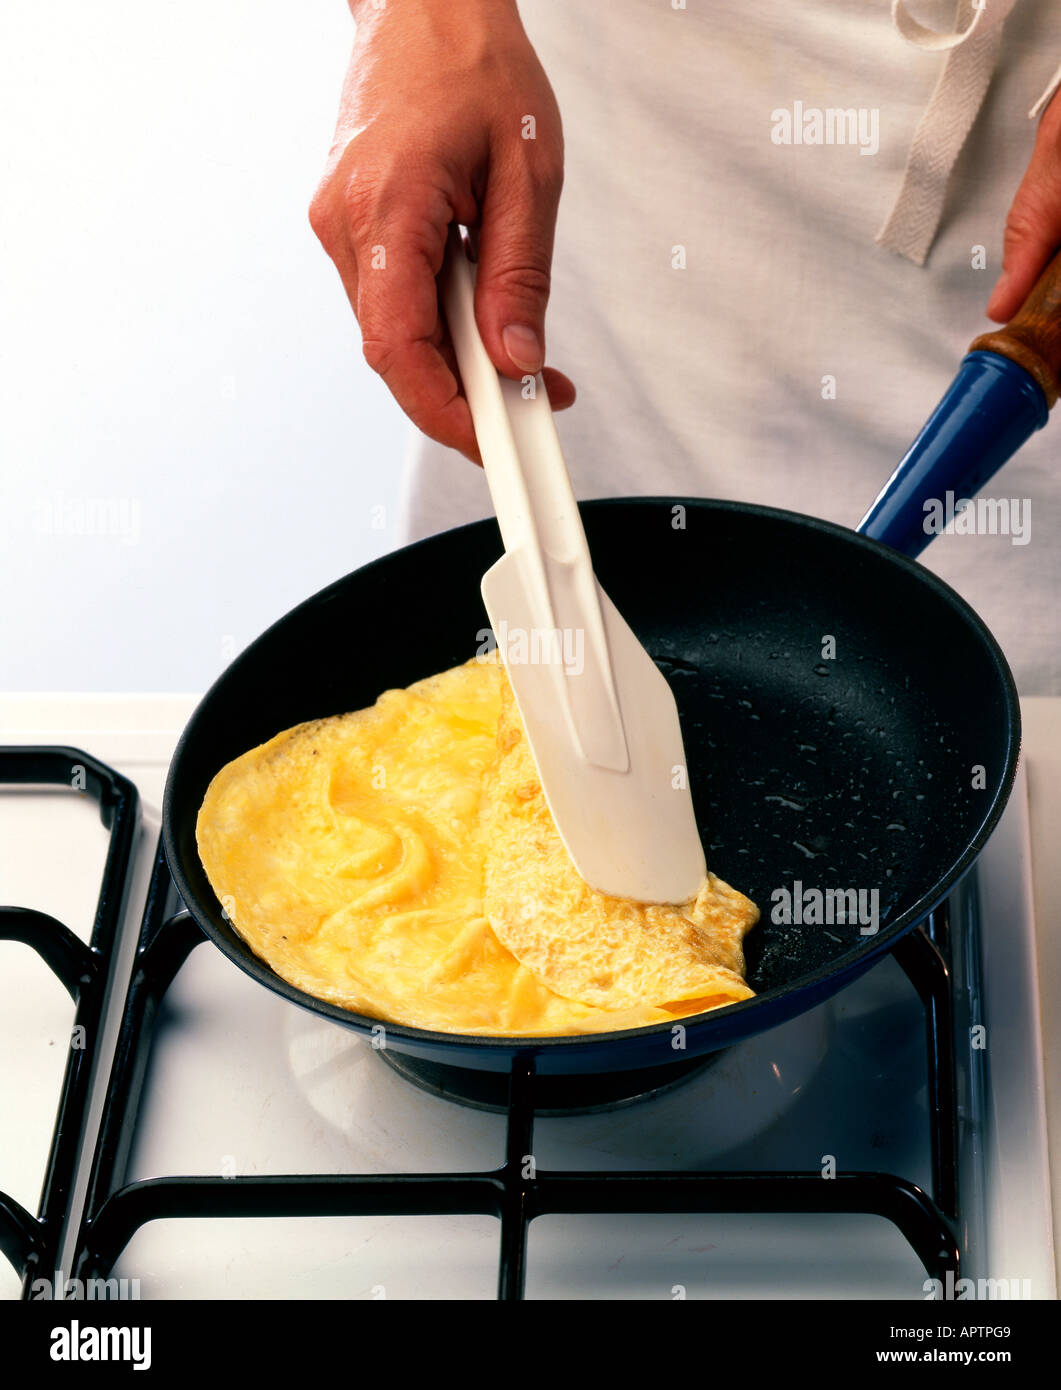 https://c8.alamy.com/comp/APTPG9/making-omelettes-folding-over-plain-omelette-using-a-large-spatula-APTPG9.jpg